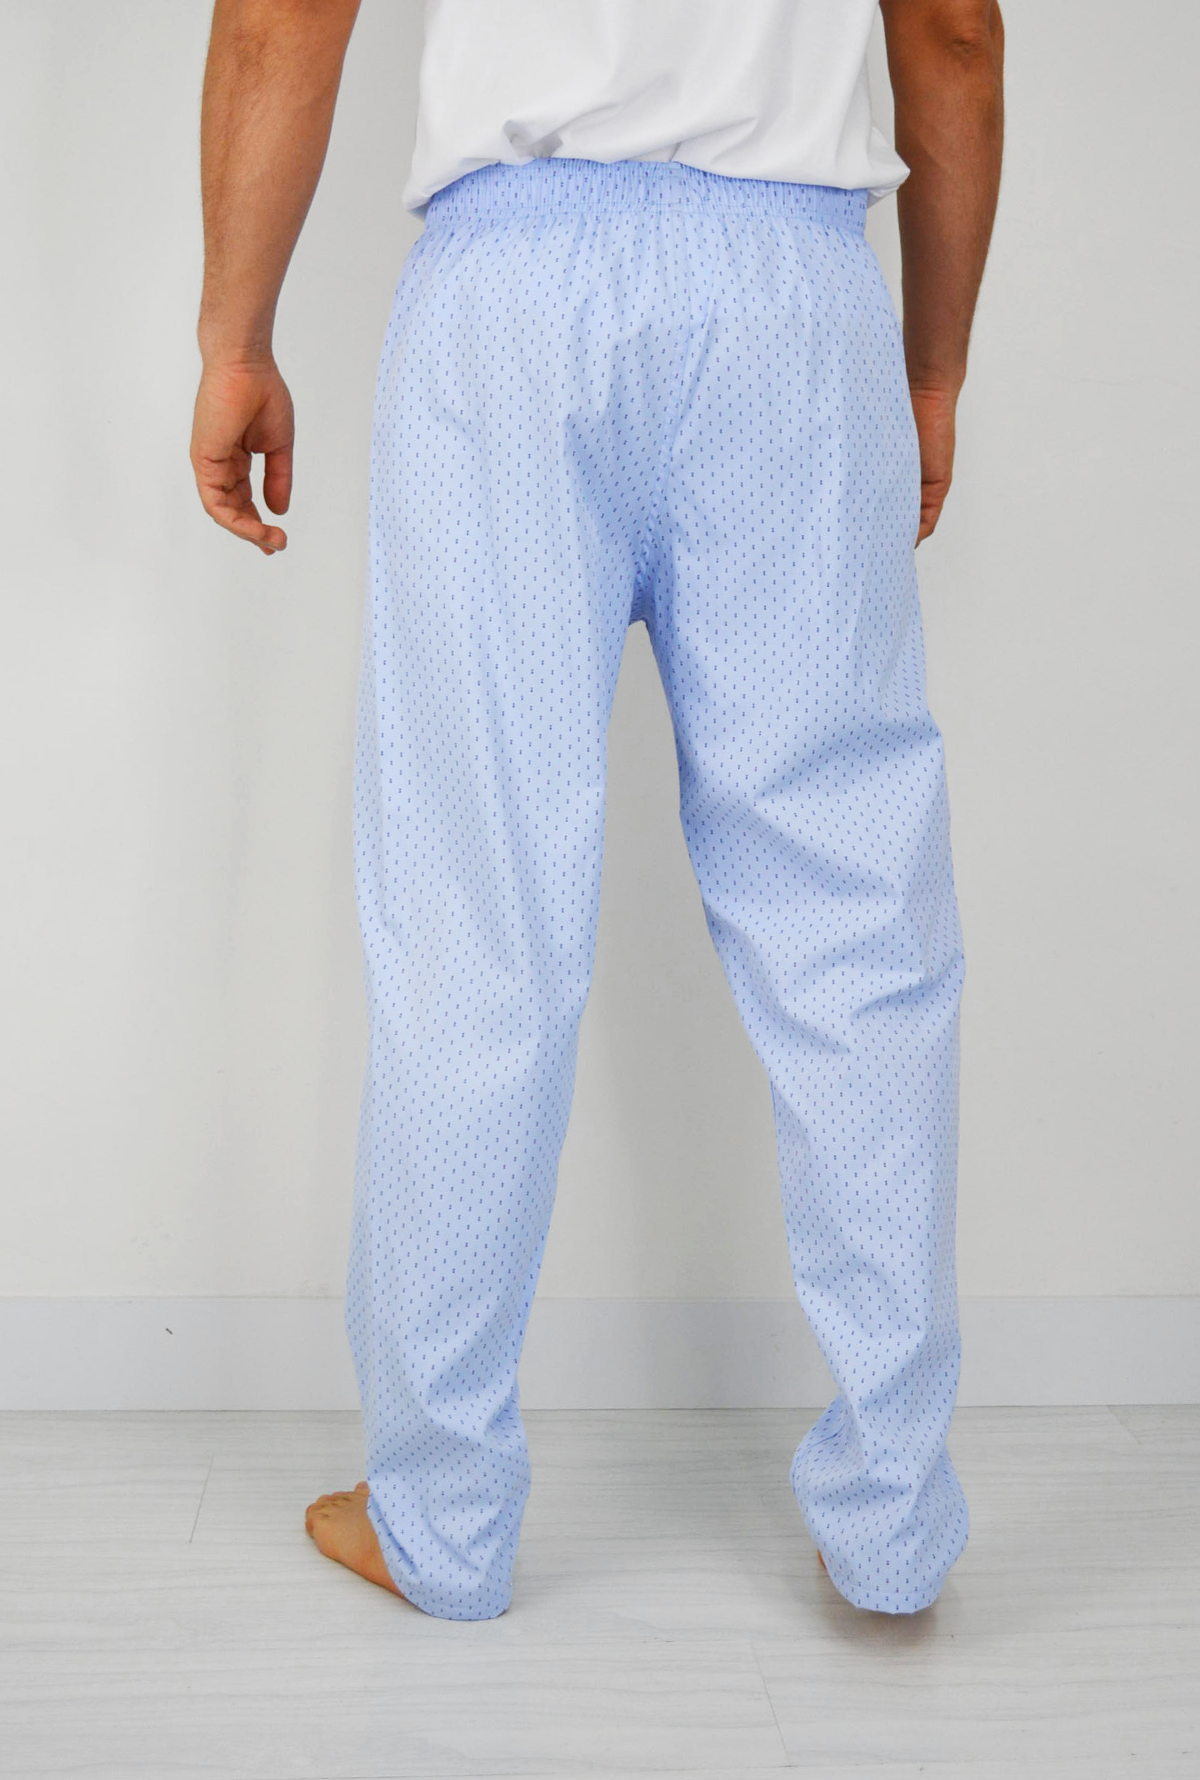 Pijama Para Hombre Azul Oscuro PJ3003-16